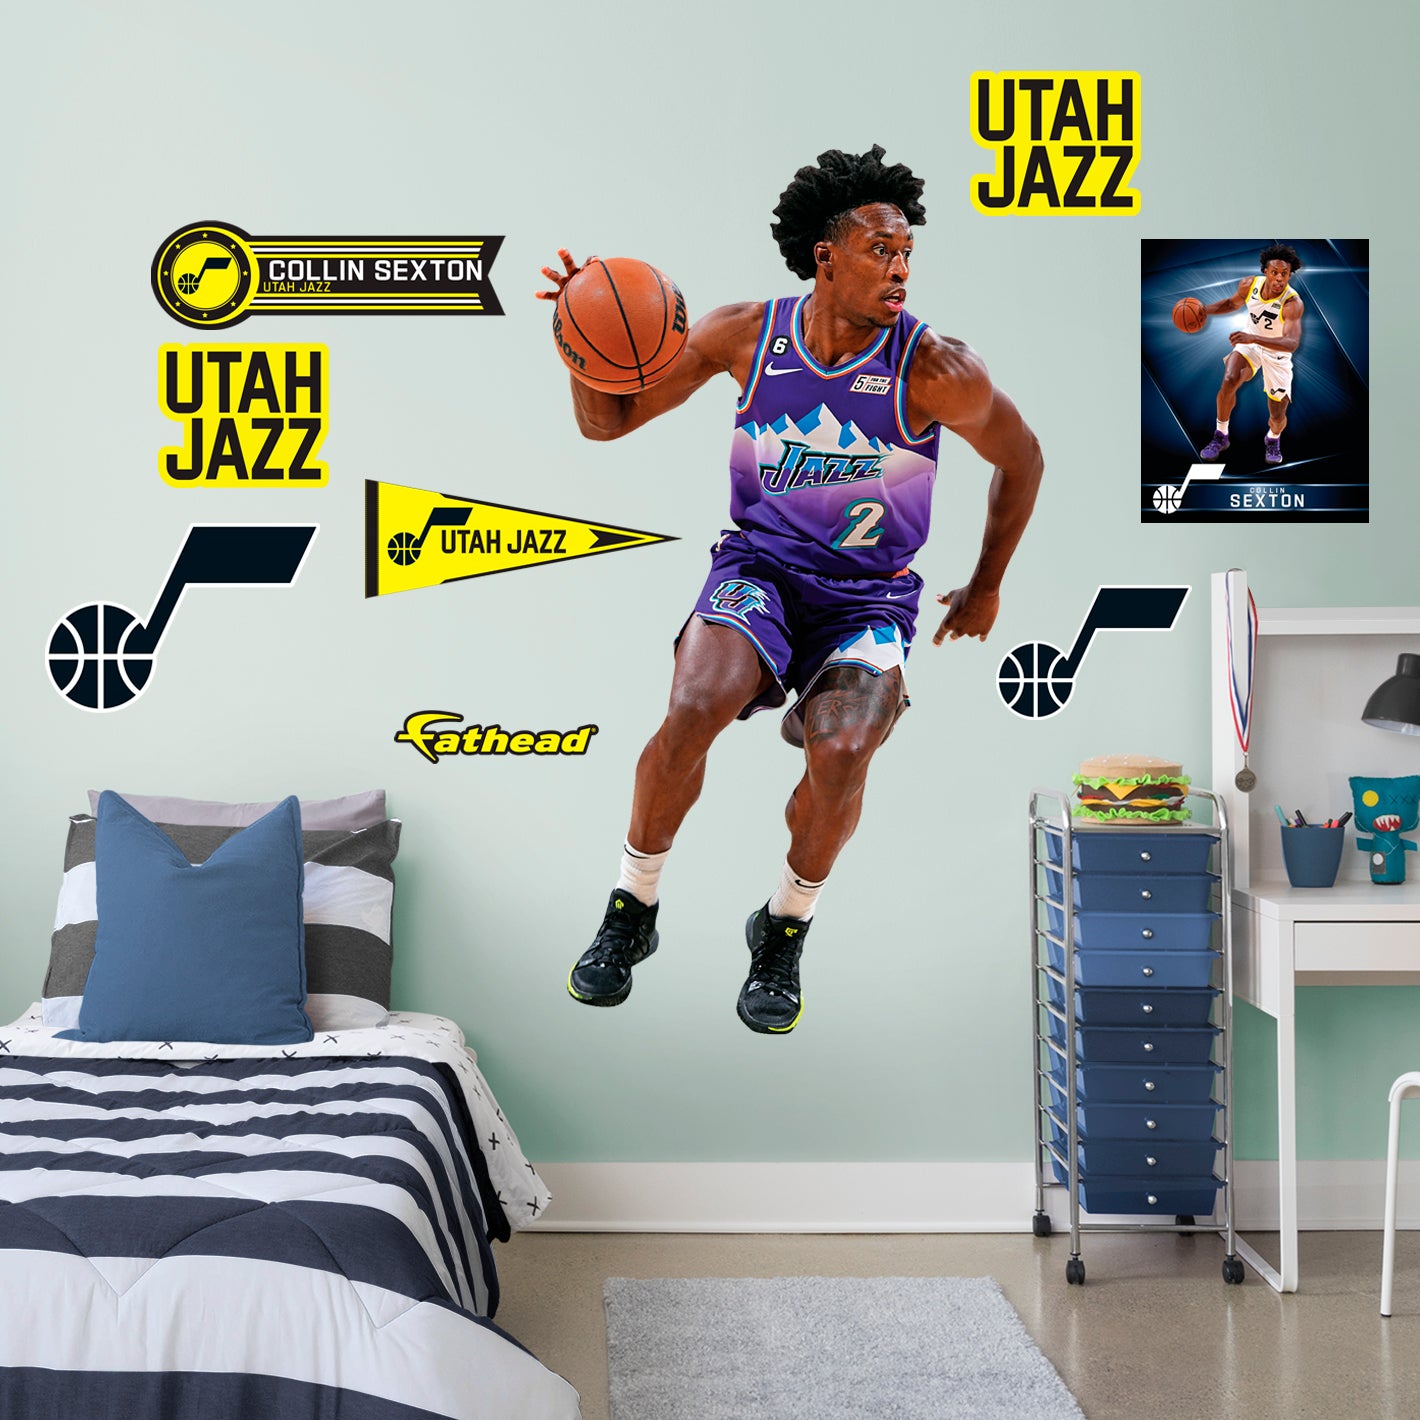 Collin Sexton, Utah Jazz